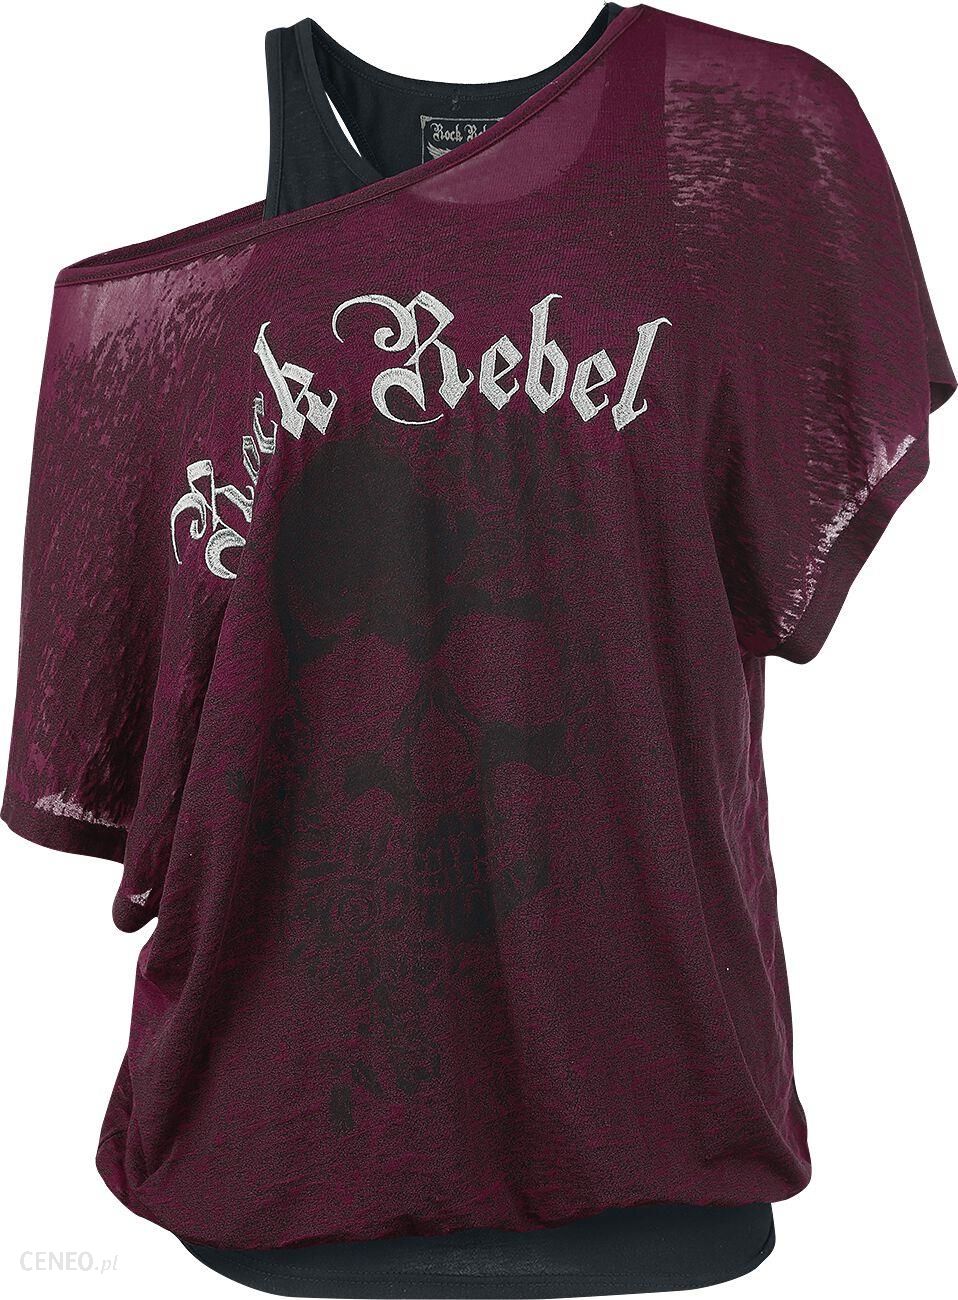 Rock Rebel by EMP When The Heart Rules The Mind Femme T-Shirt Manches Courtes Noir/Bleu 